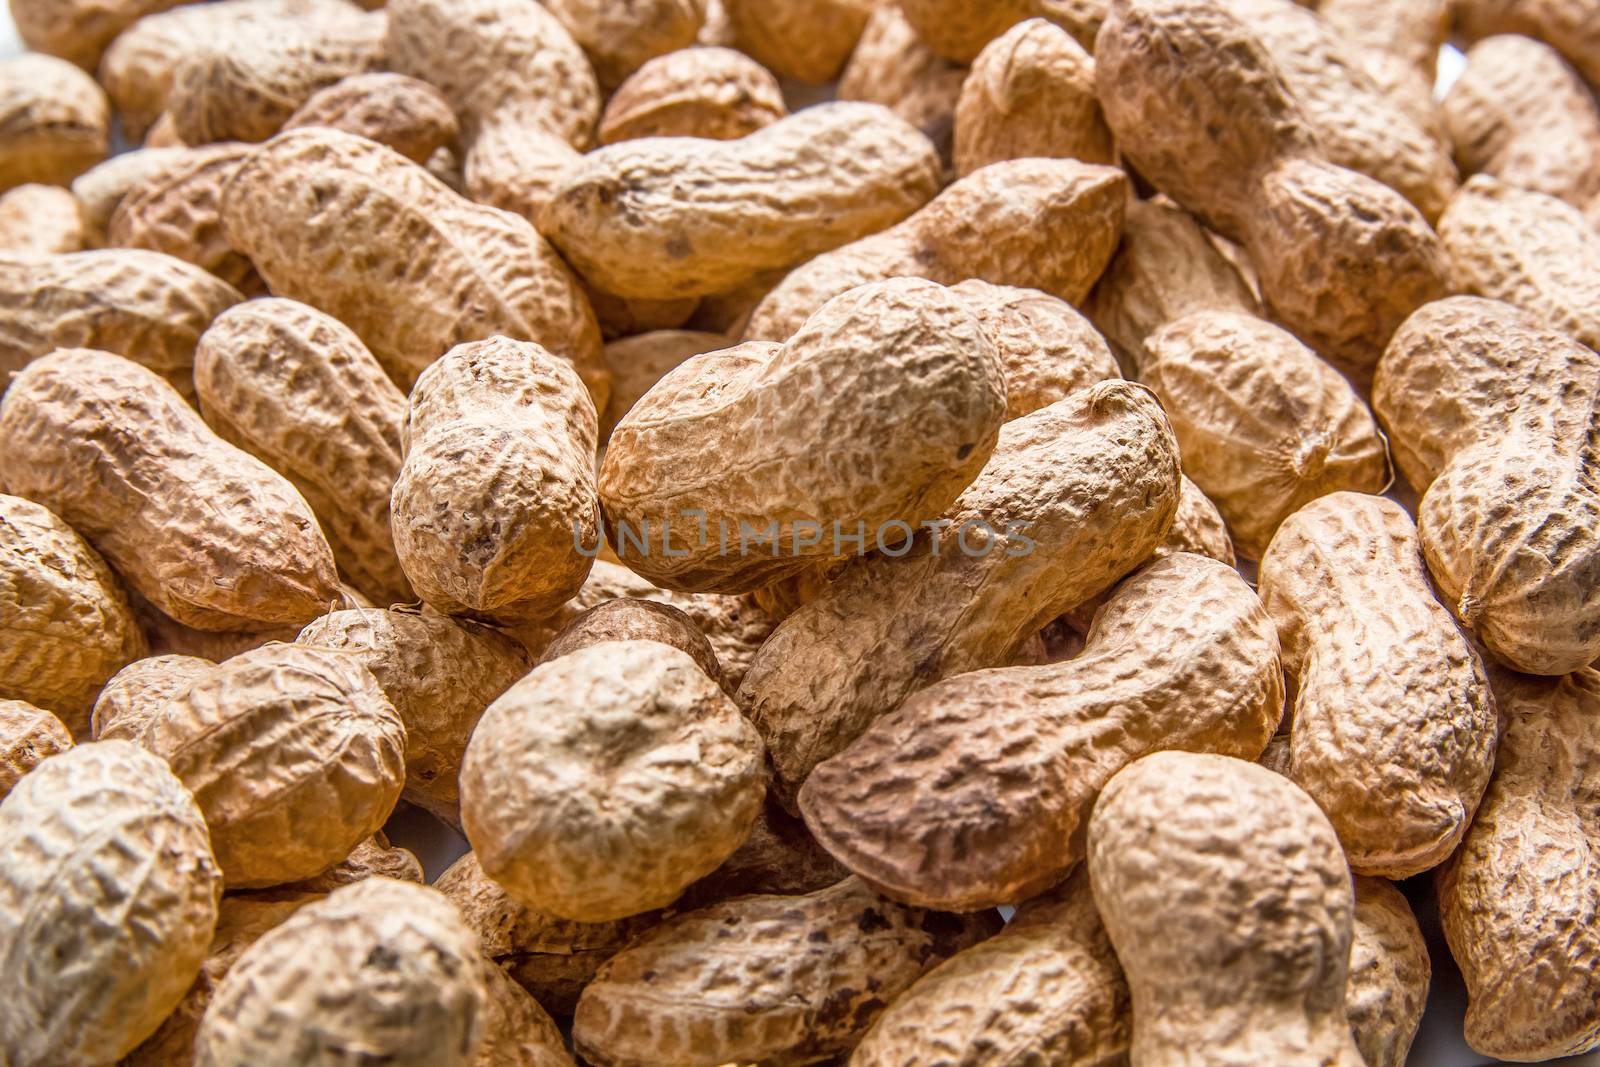 Peanuts by dynamicfoto